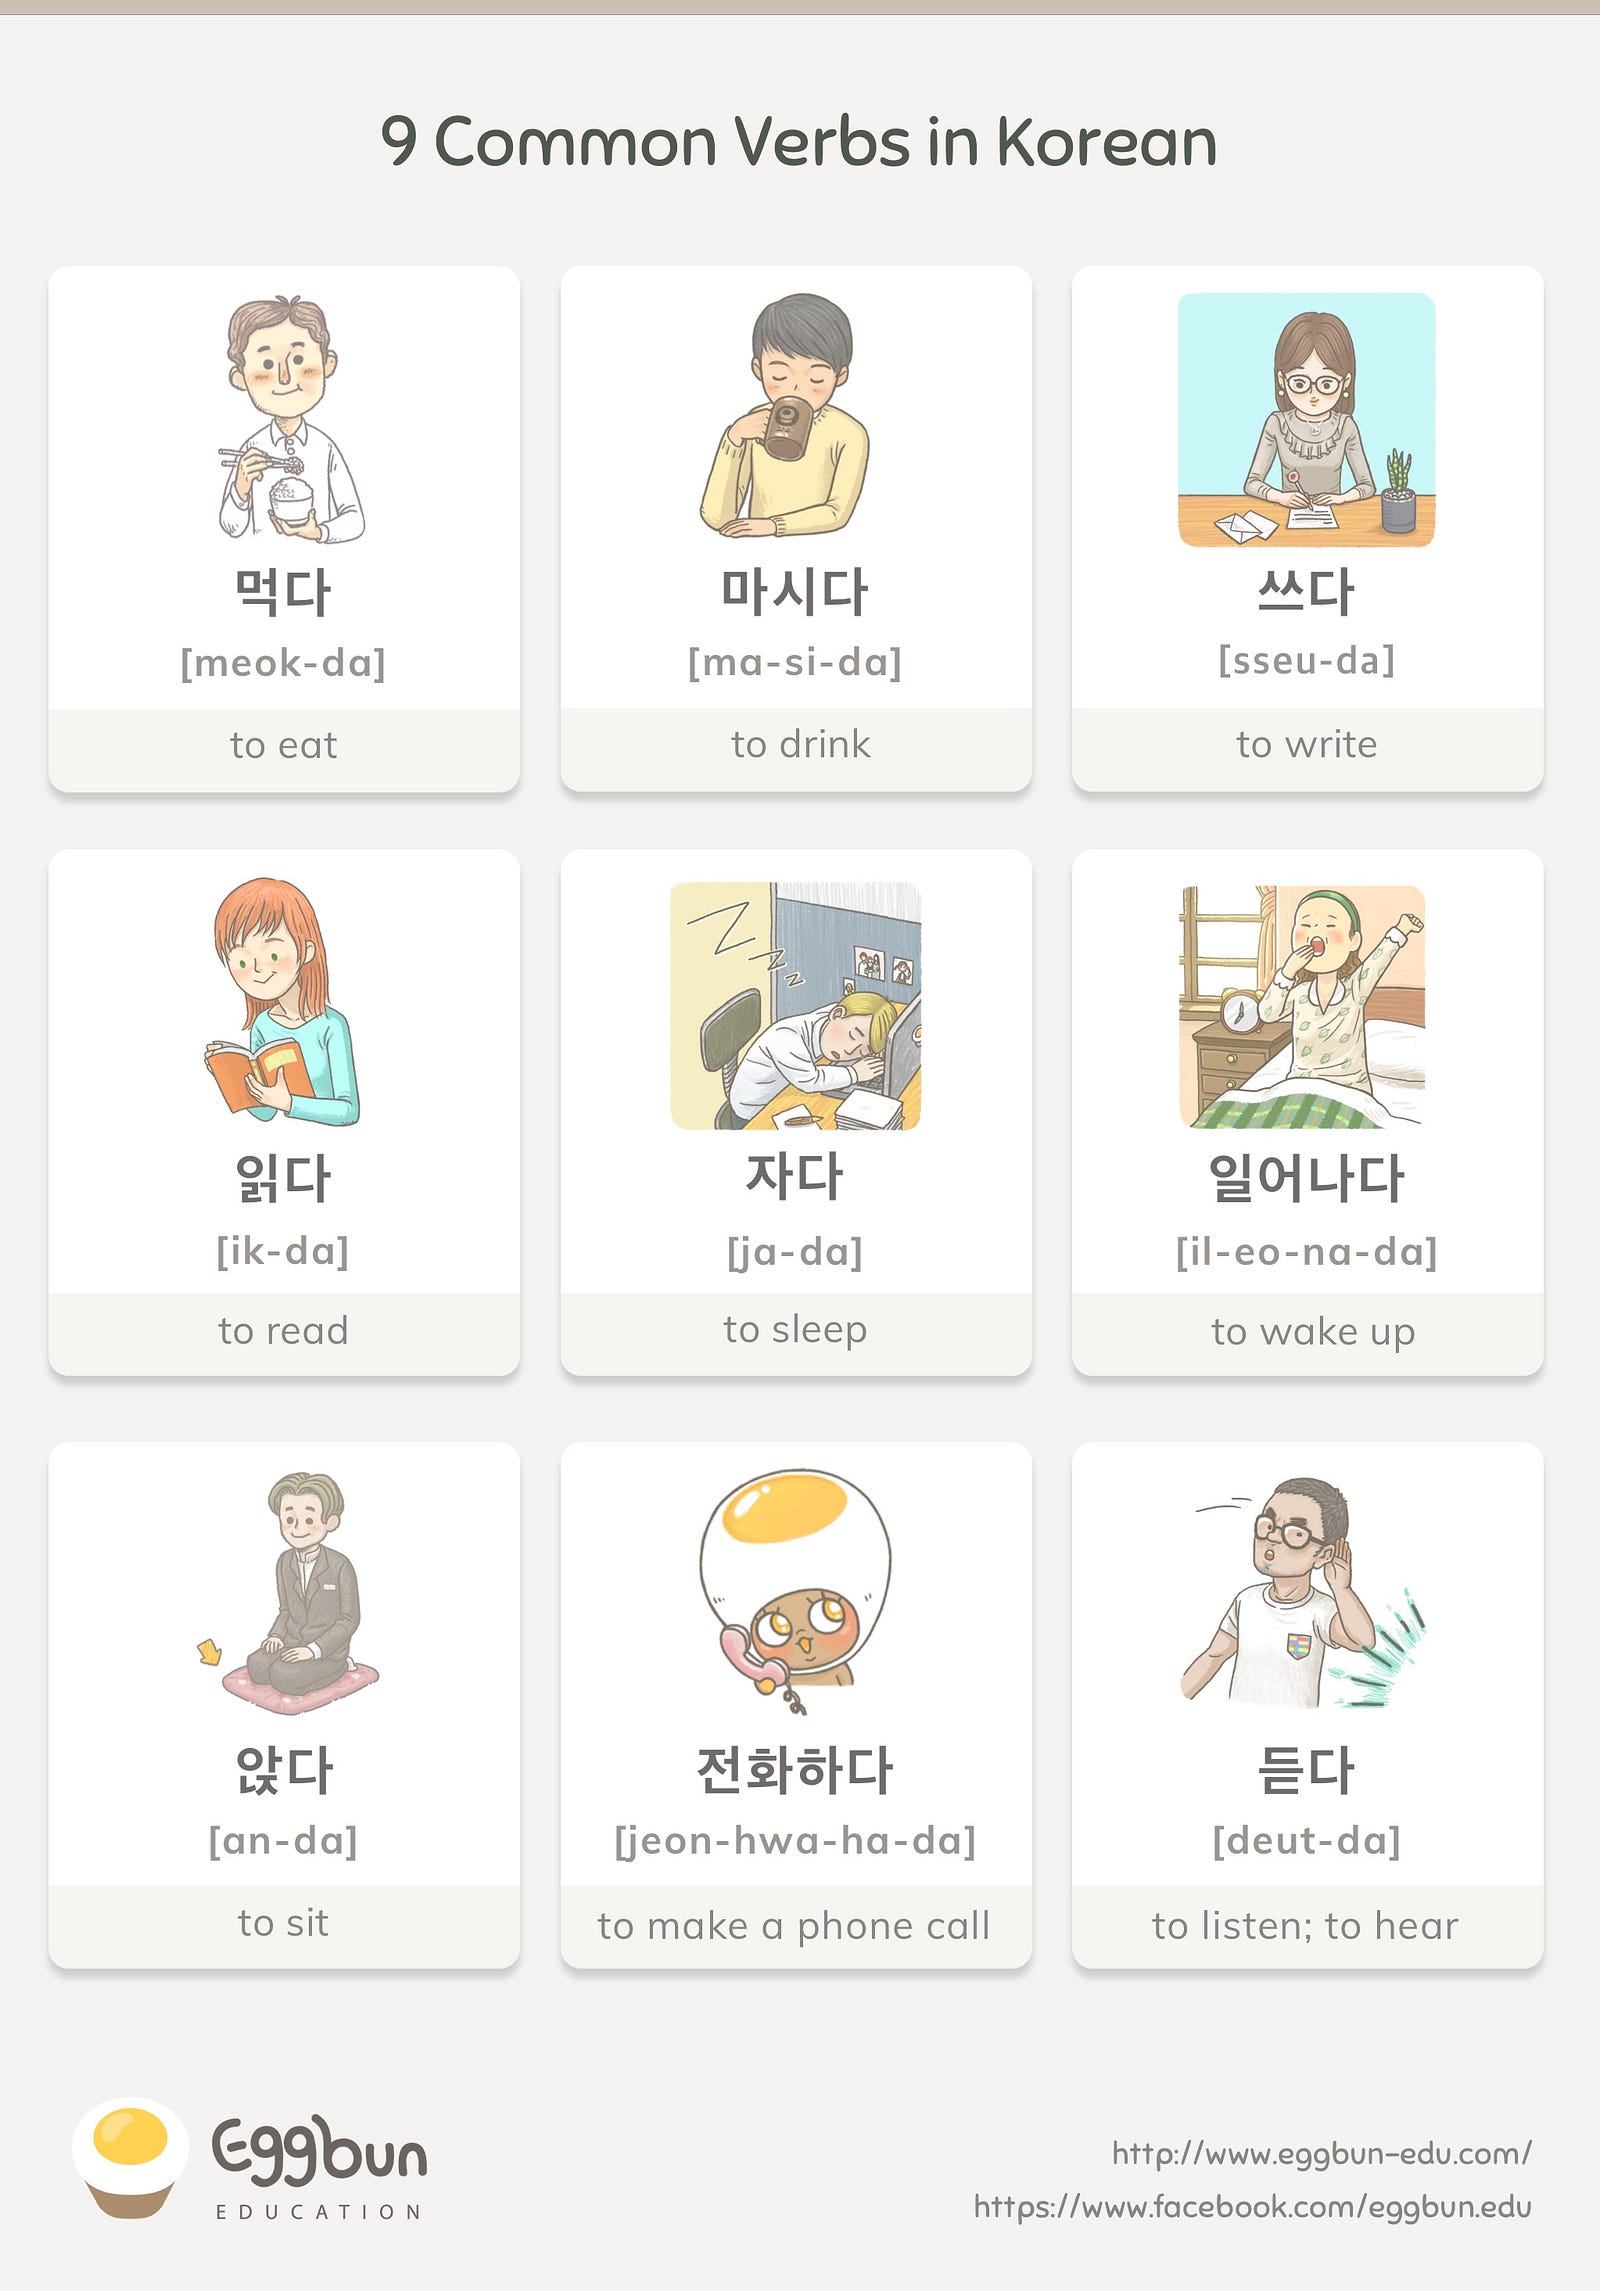 9-common-verbs-in-korean-story-of-eggbun-education-medium